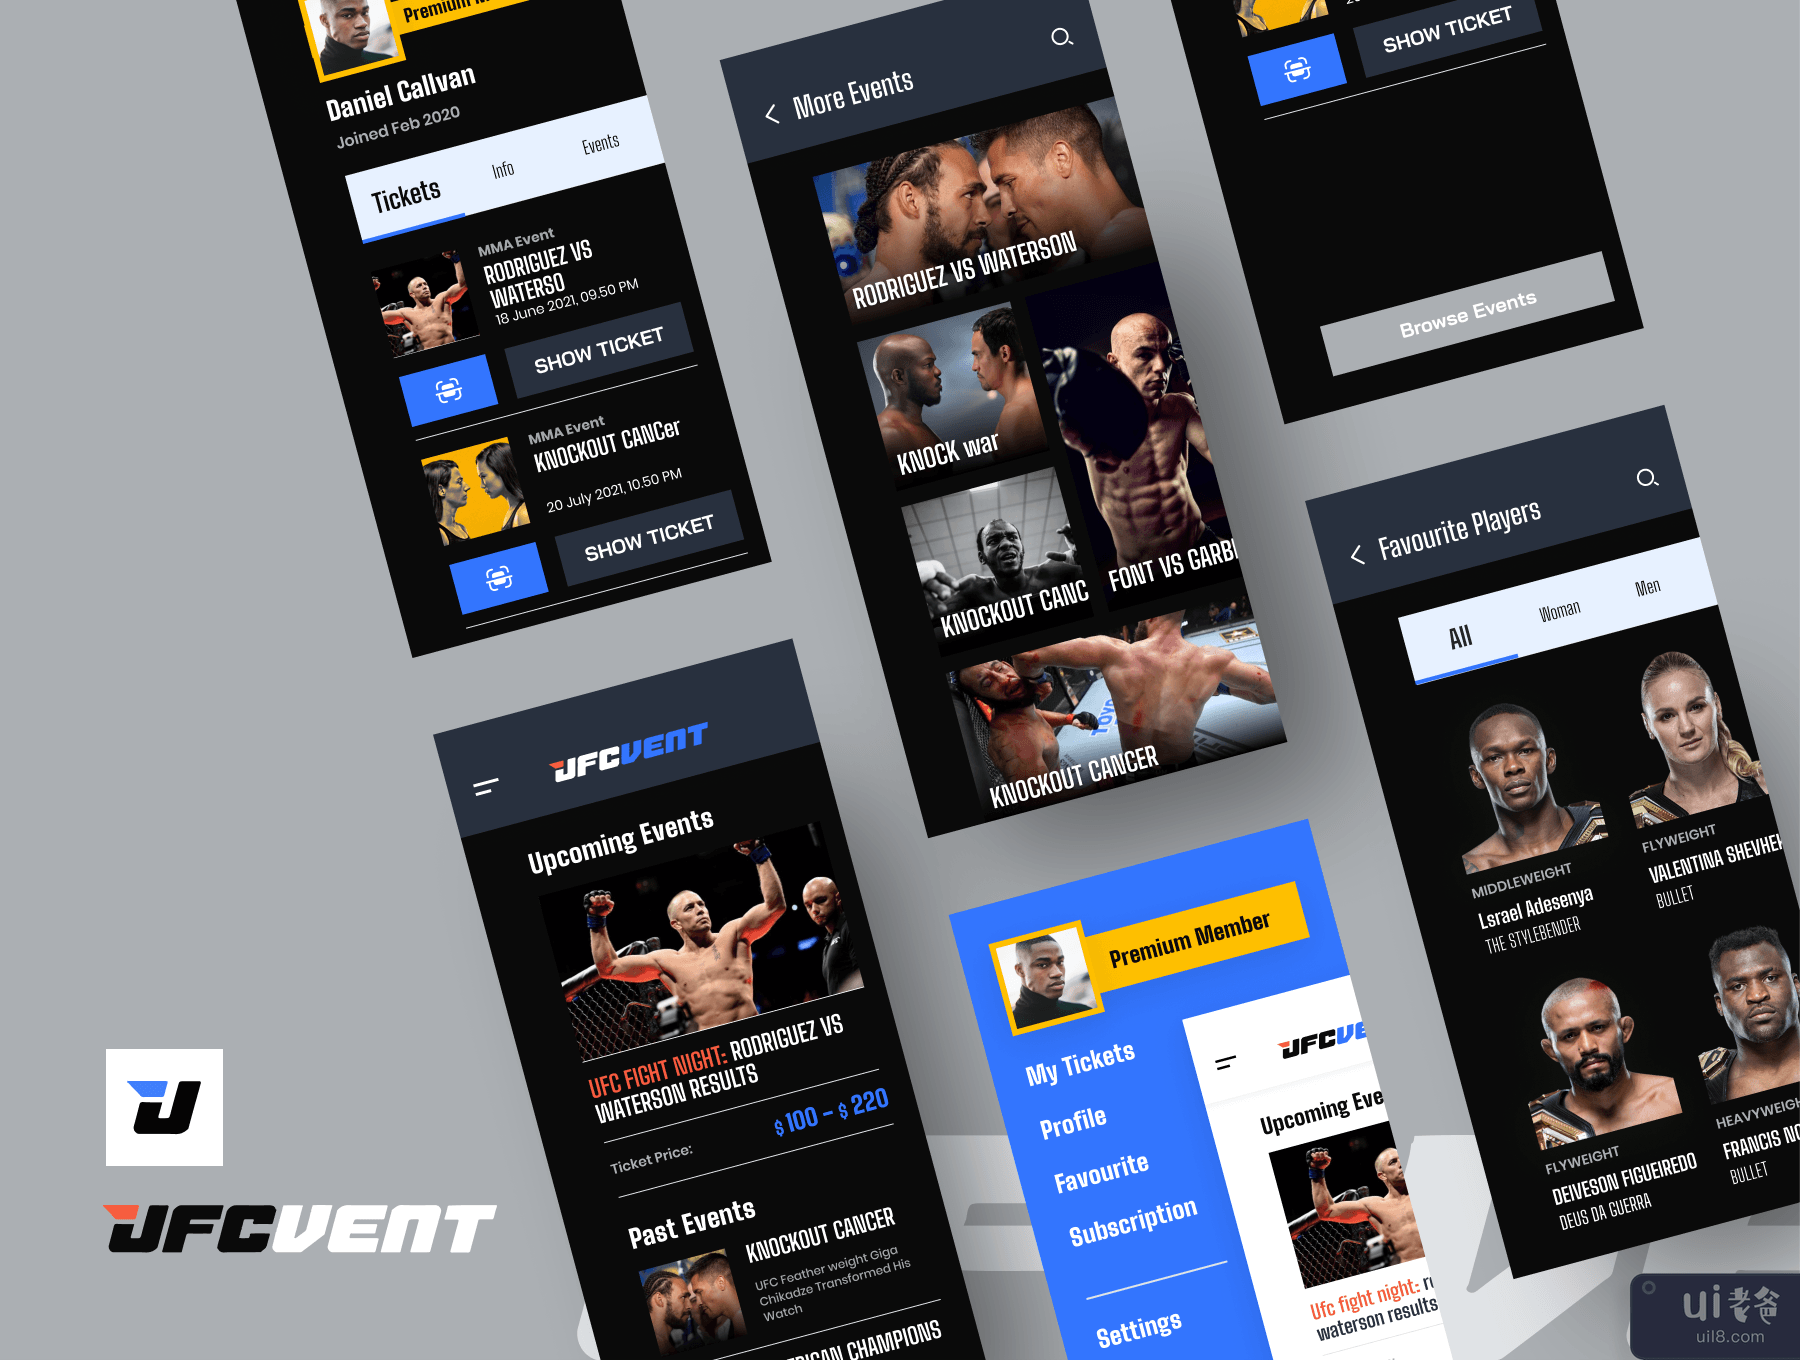 UFC VENT - MMA 赛事预订 40+ 屏幕(UFC VENT - MMA Event Booking 40+ Screens)插图